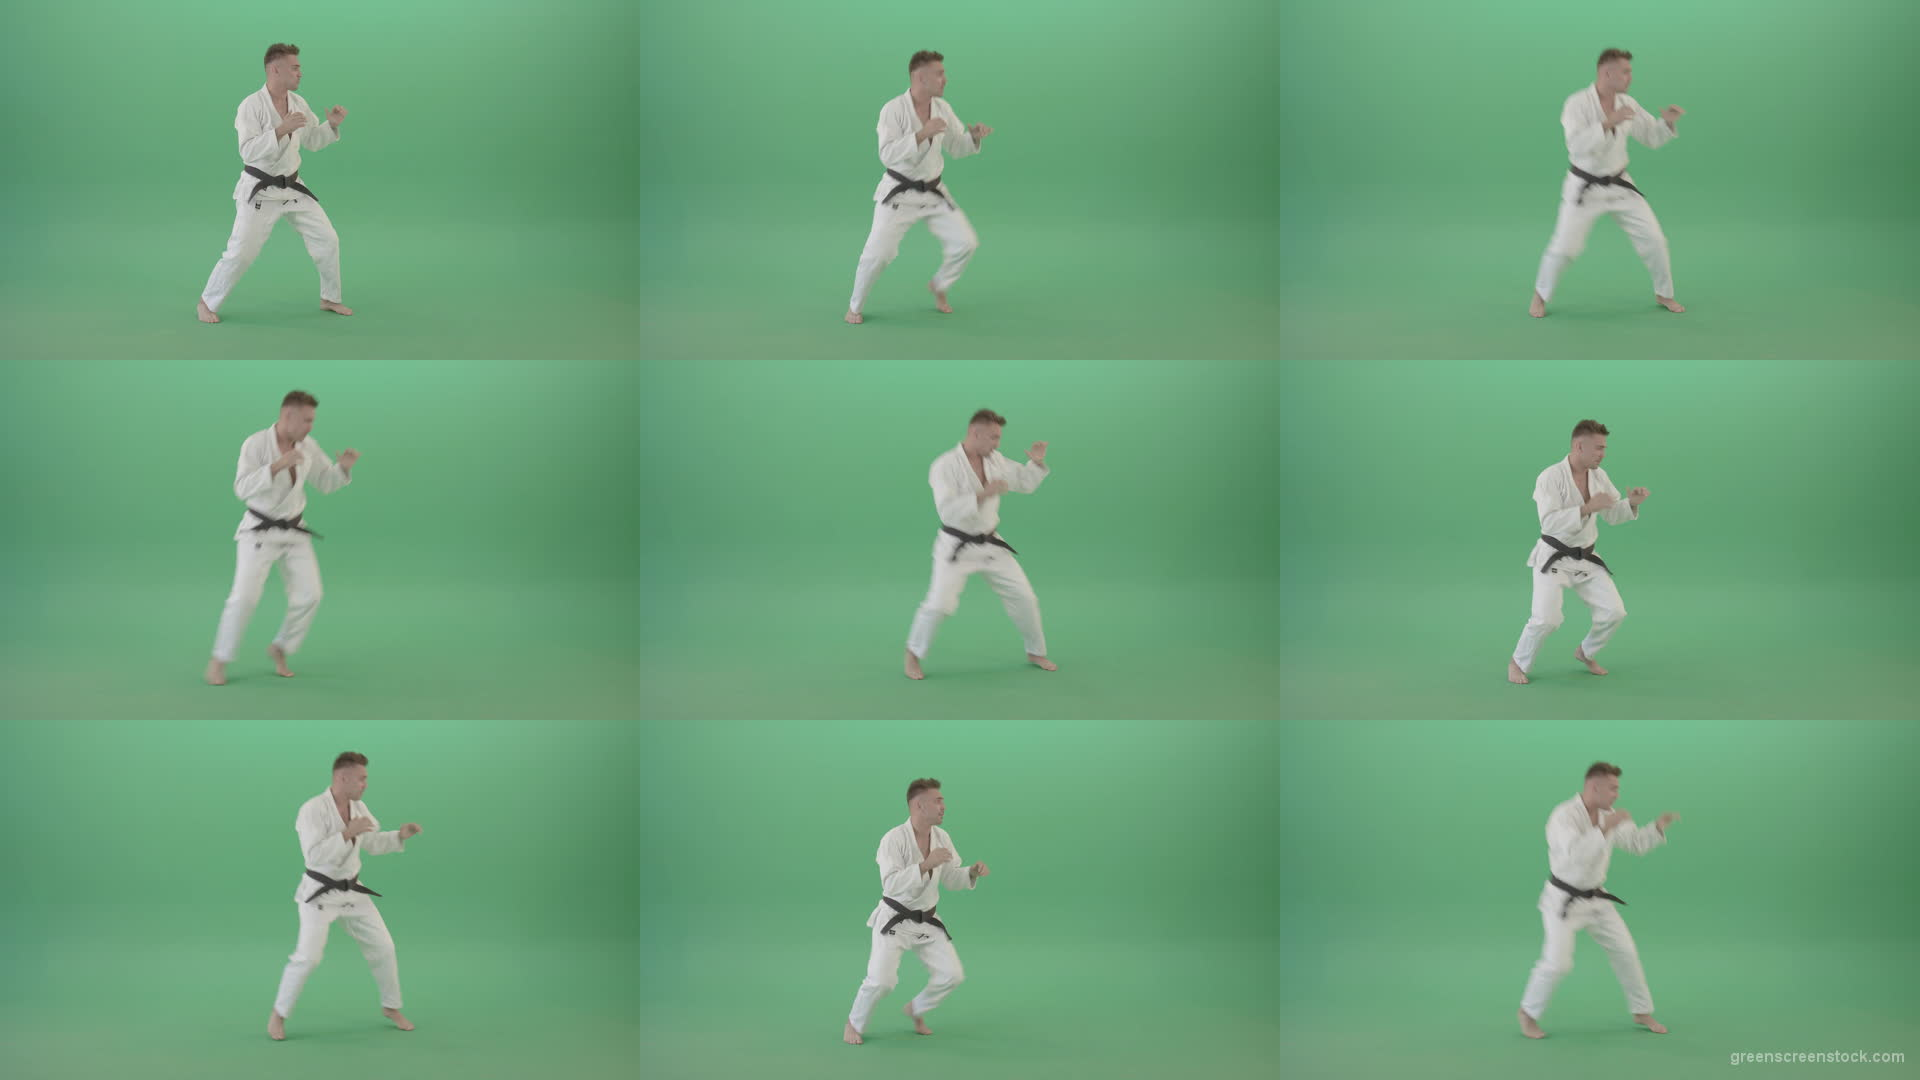 Jujutsu-Man-trianing-to-fight-combat-isolated-on-green-screen-1920 Green Screen Stock